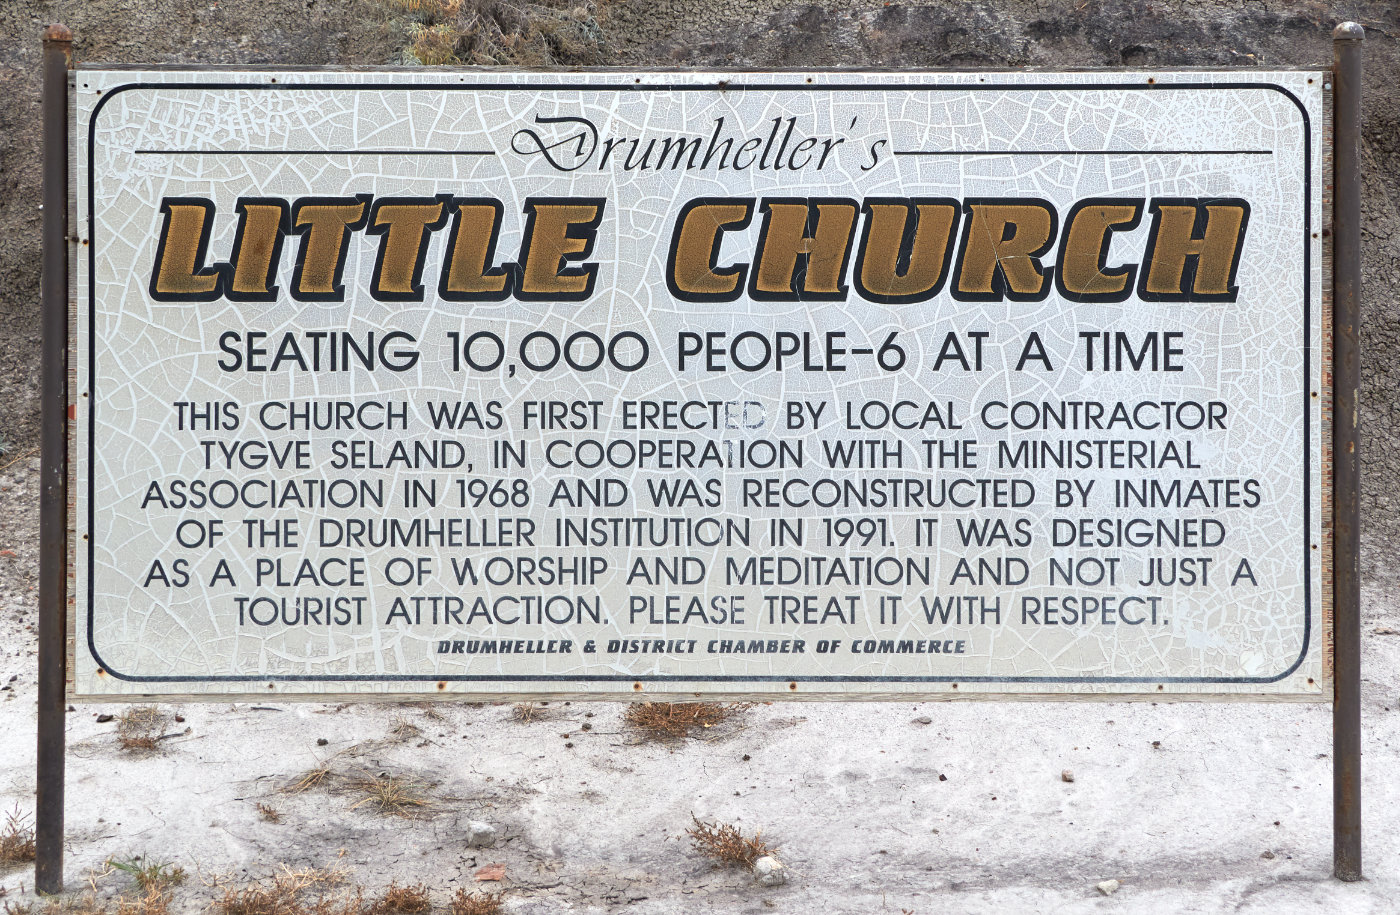 The Little Church, Drumheller